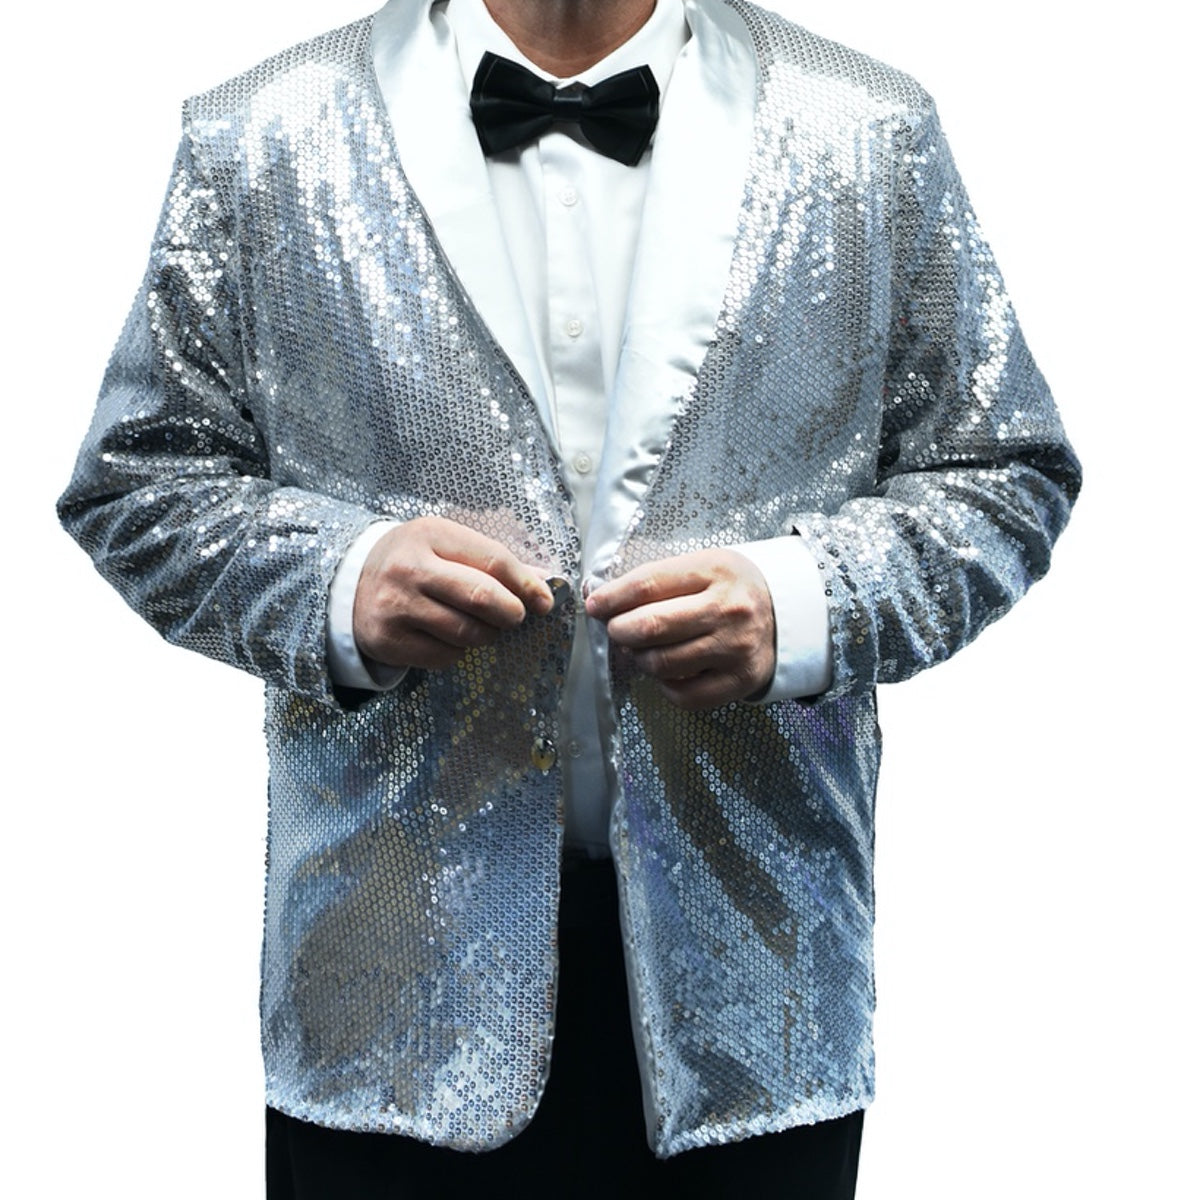 Silver Glitter Tuxedo Jacket